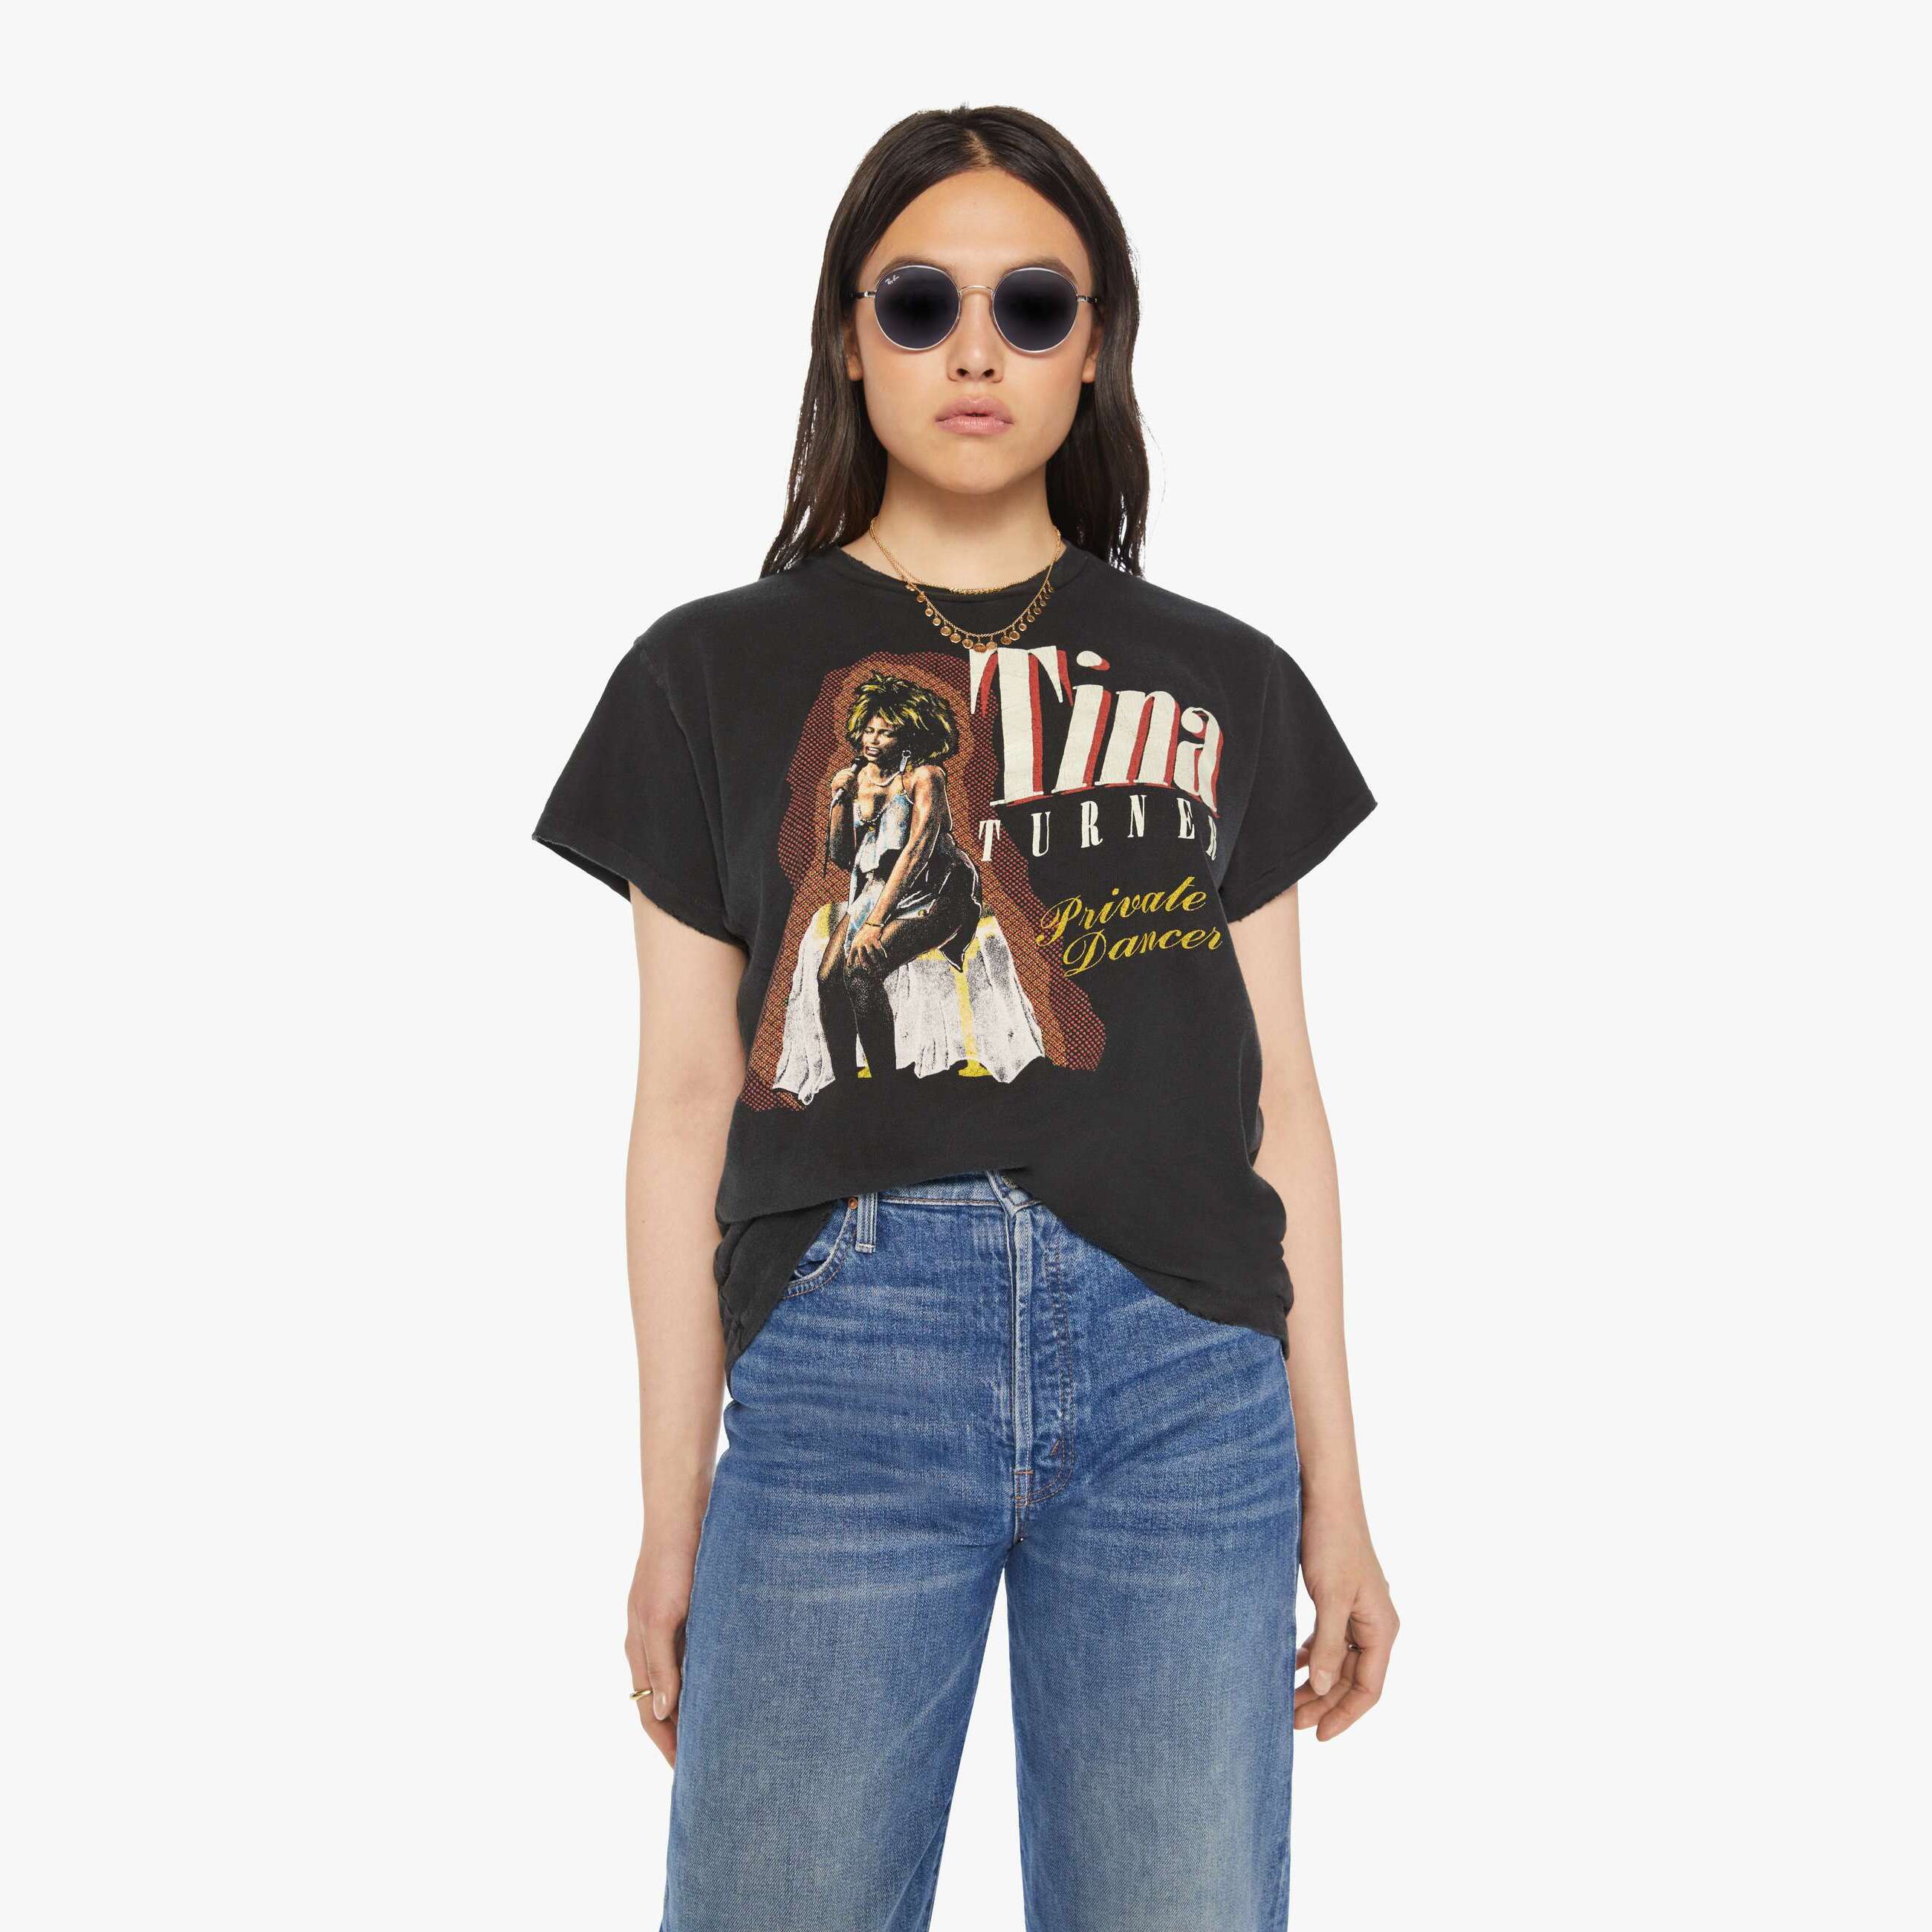 Madeworn Tina Turner Coal T-shirt In Charcoal